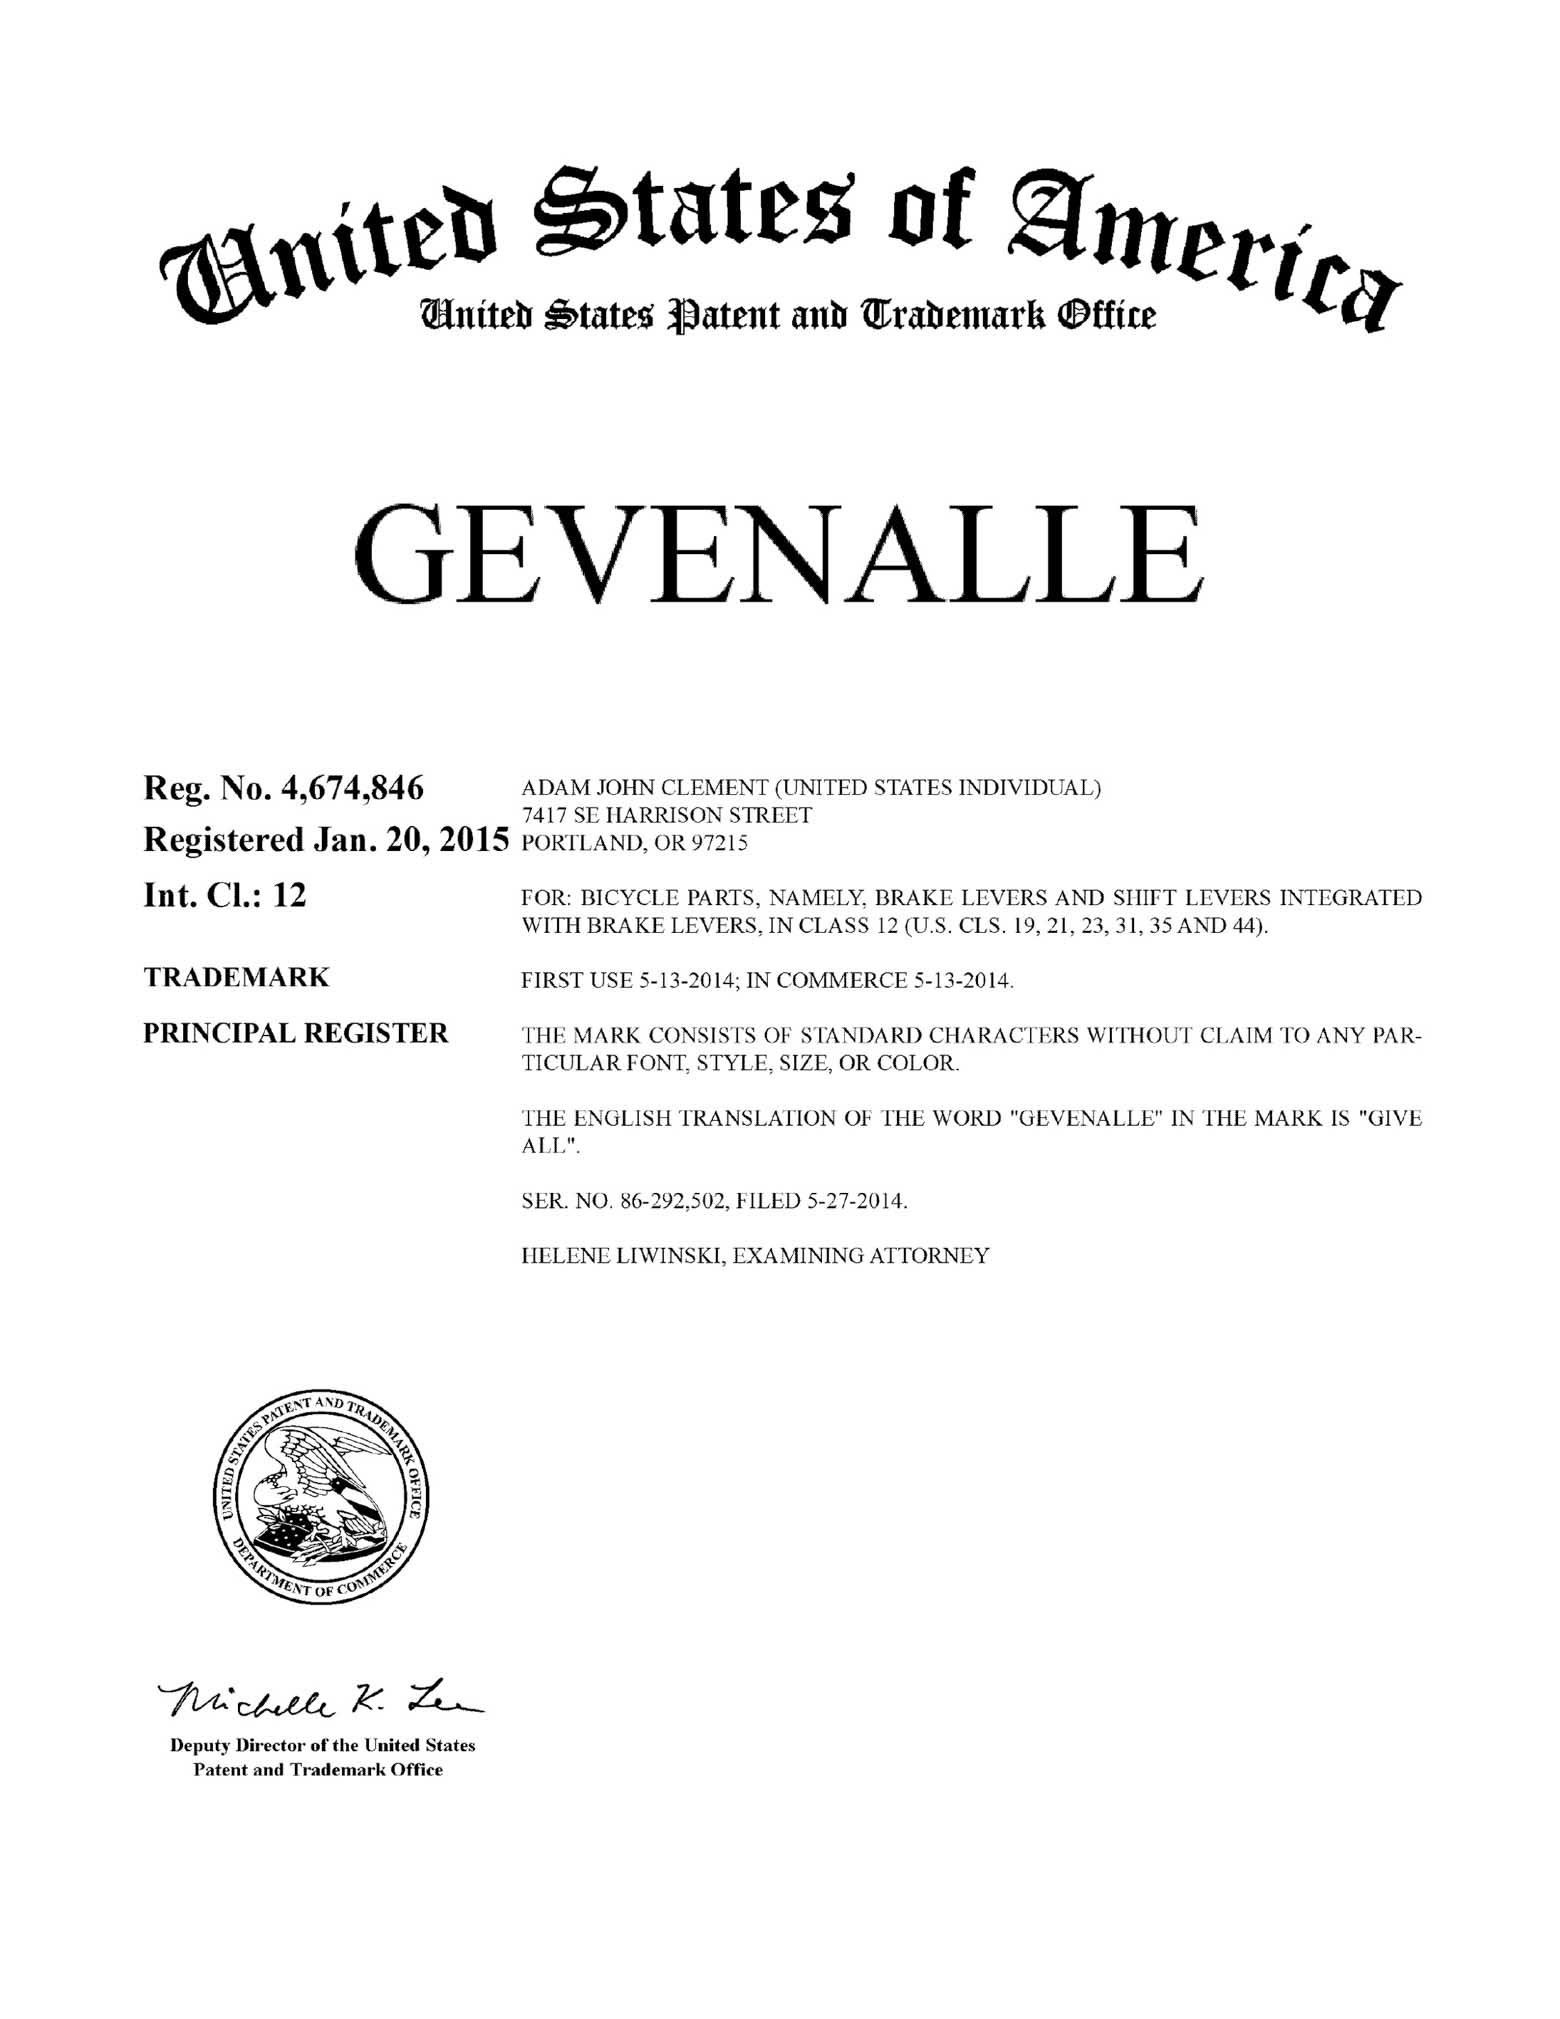 US Trademark 4,674,846 - Gevenalle main image